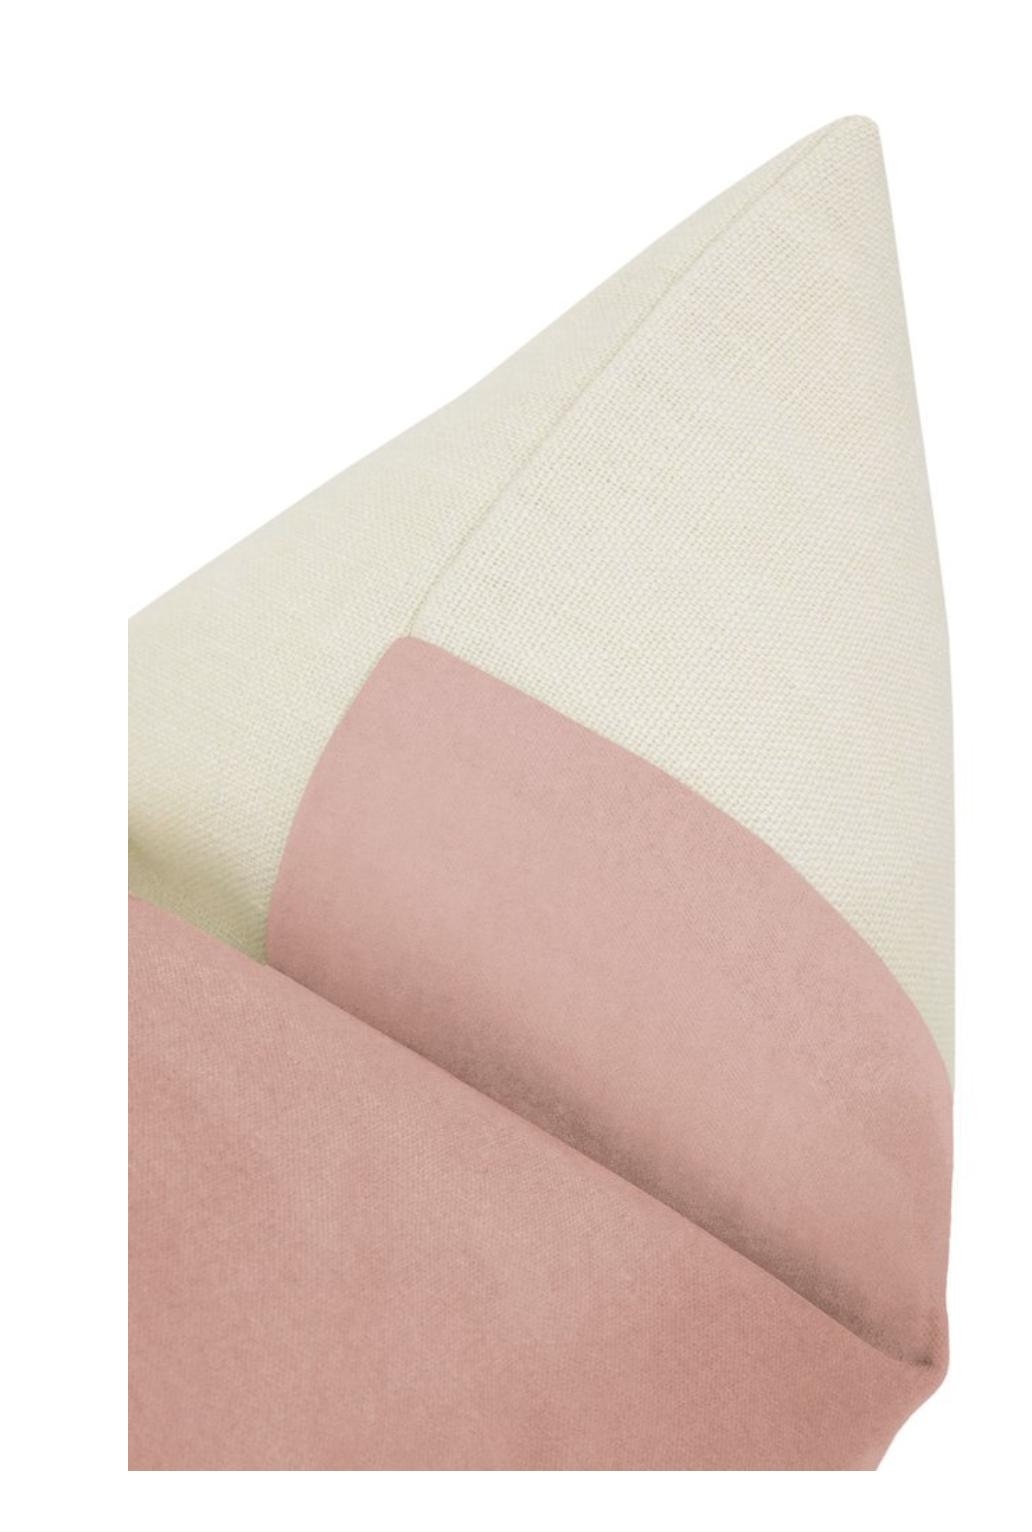 The Little Lumbar Panel Classic Velvet Throw Pillow Cover, Blush, 18" x 12" - Image 3